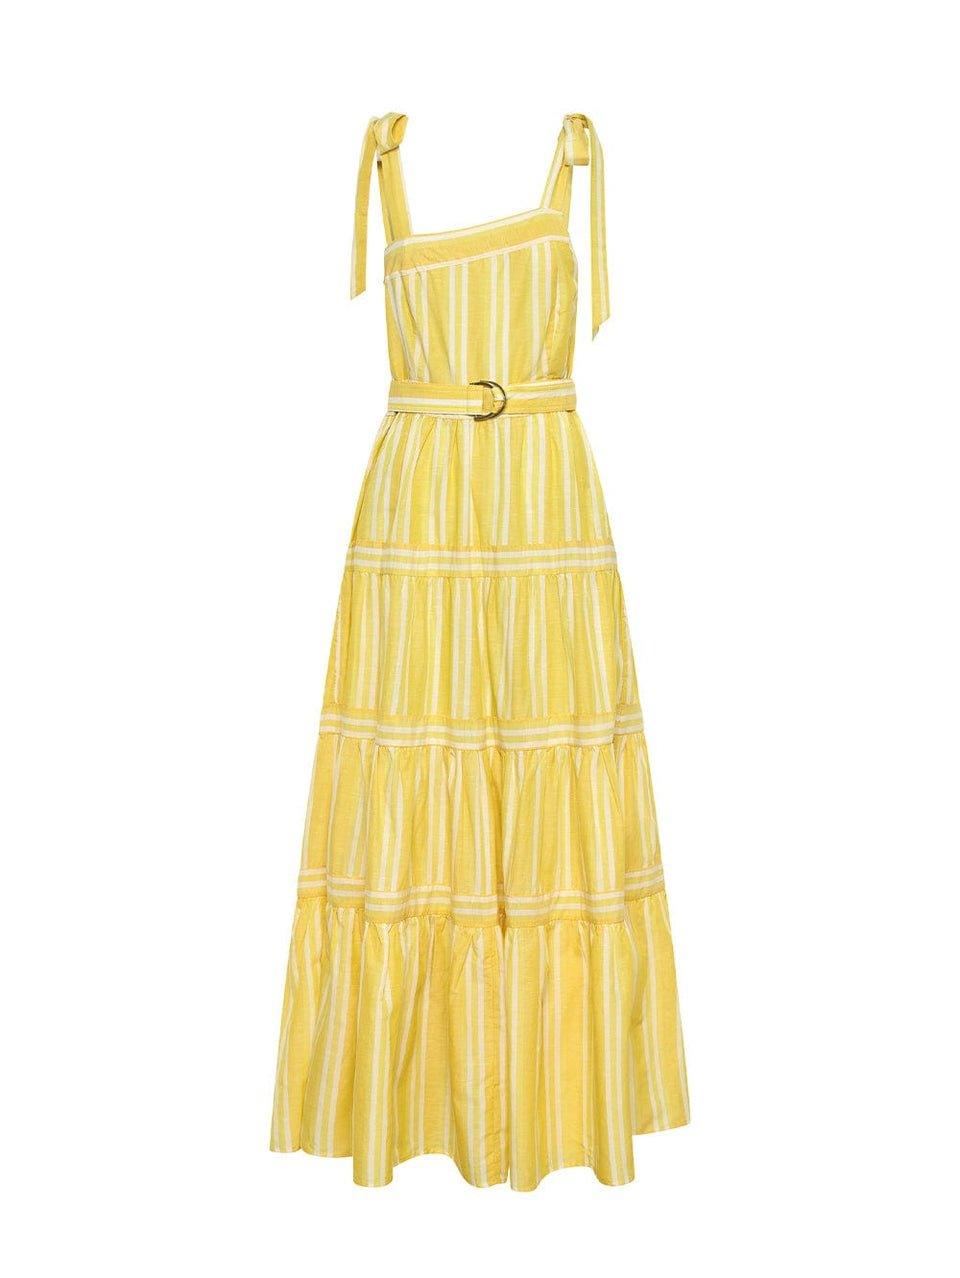 Lola Maxi Dress KIVARI | Yellow and white striped maxi dress